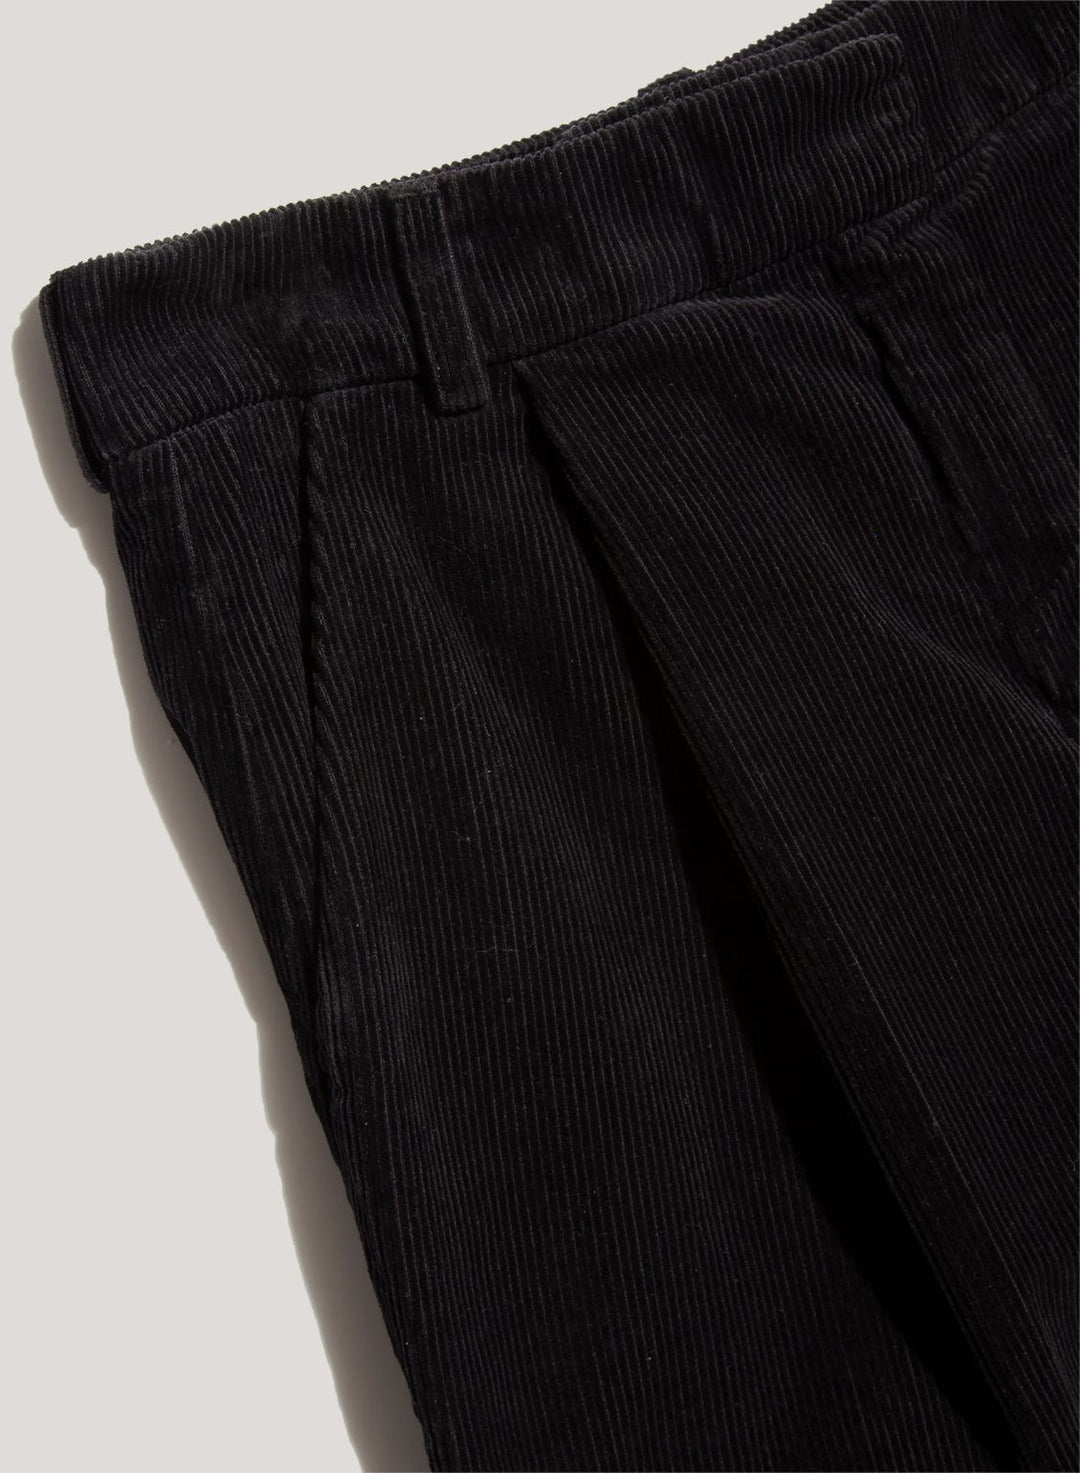 Market Corduroy Trouser - Black